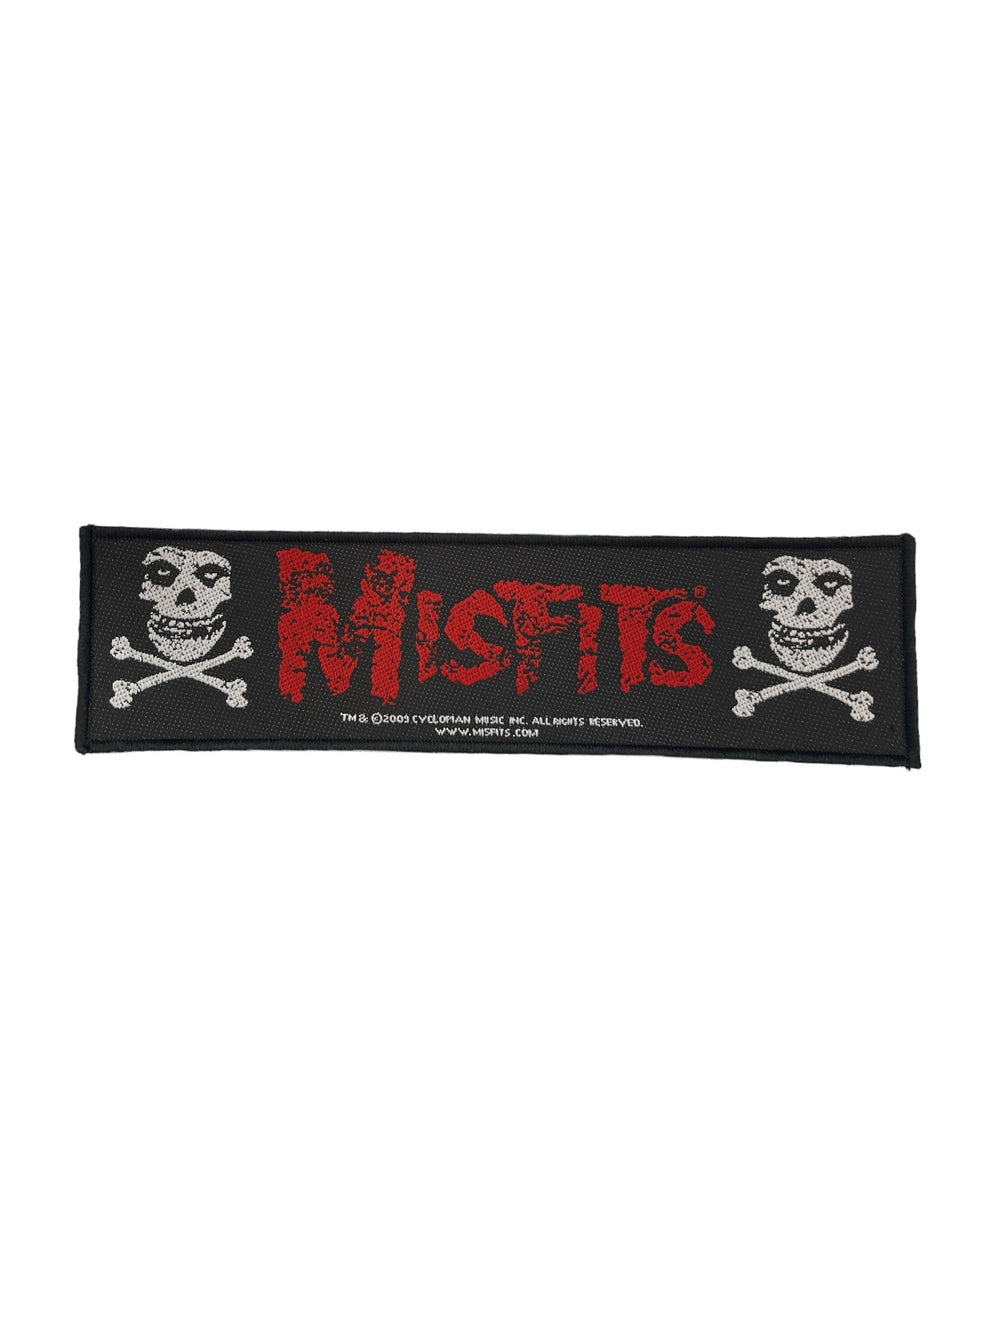 Misfits Super Strip Patch: Cross Bones Official Woven Patch Brand New